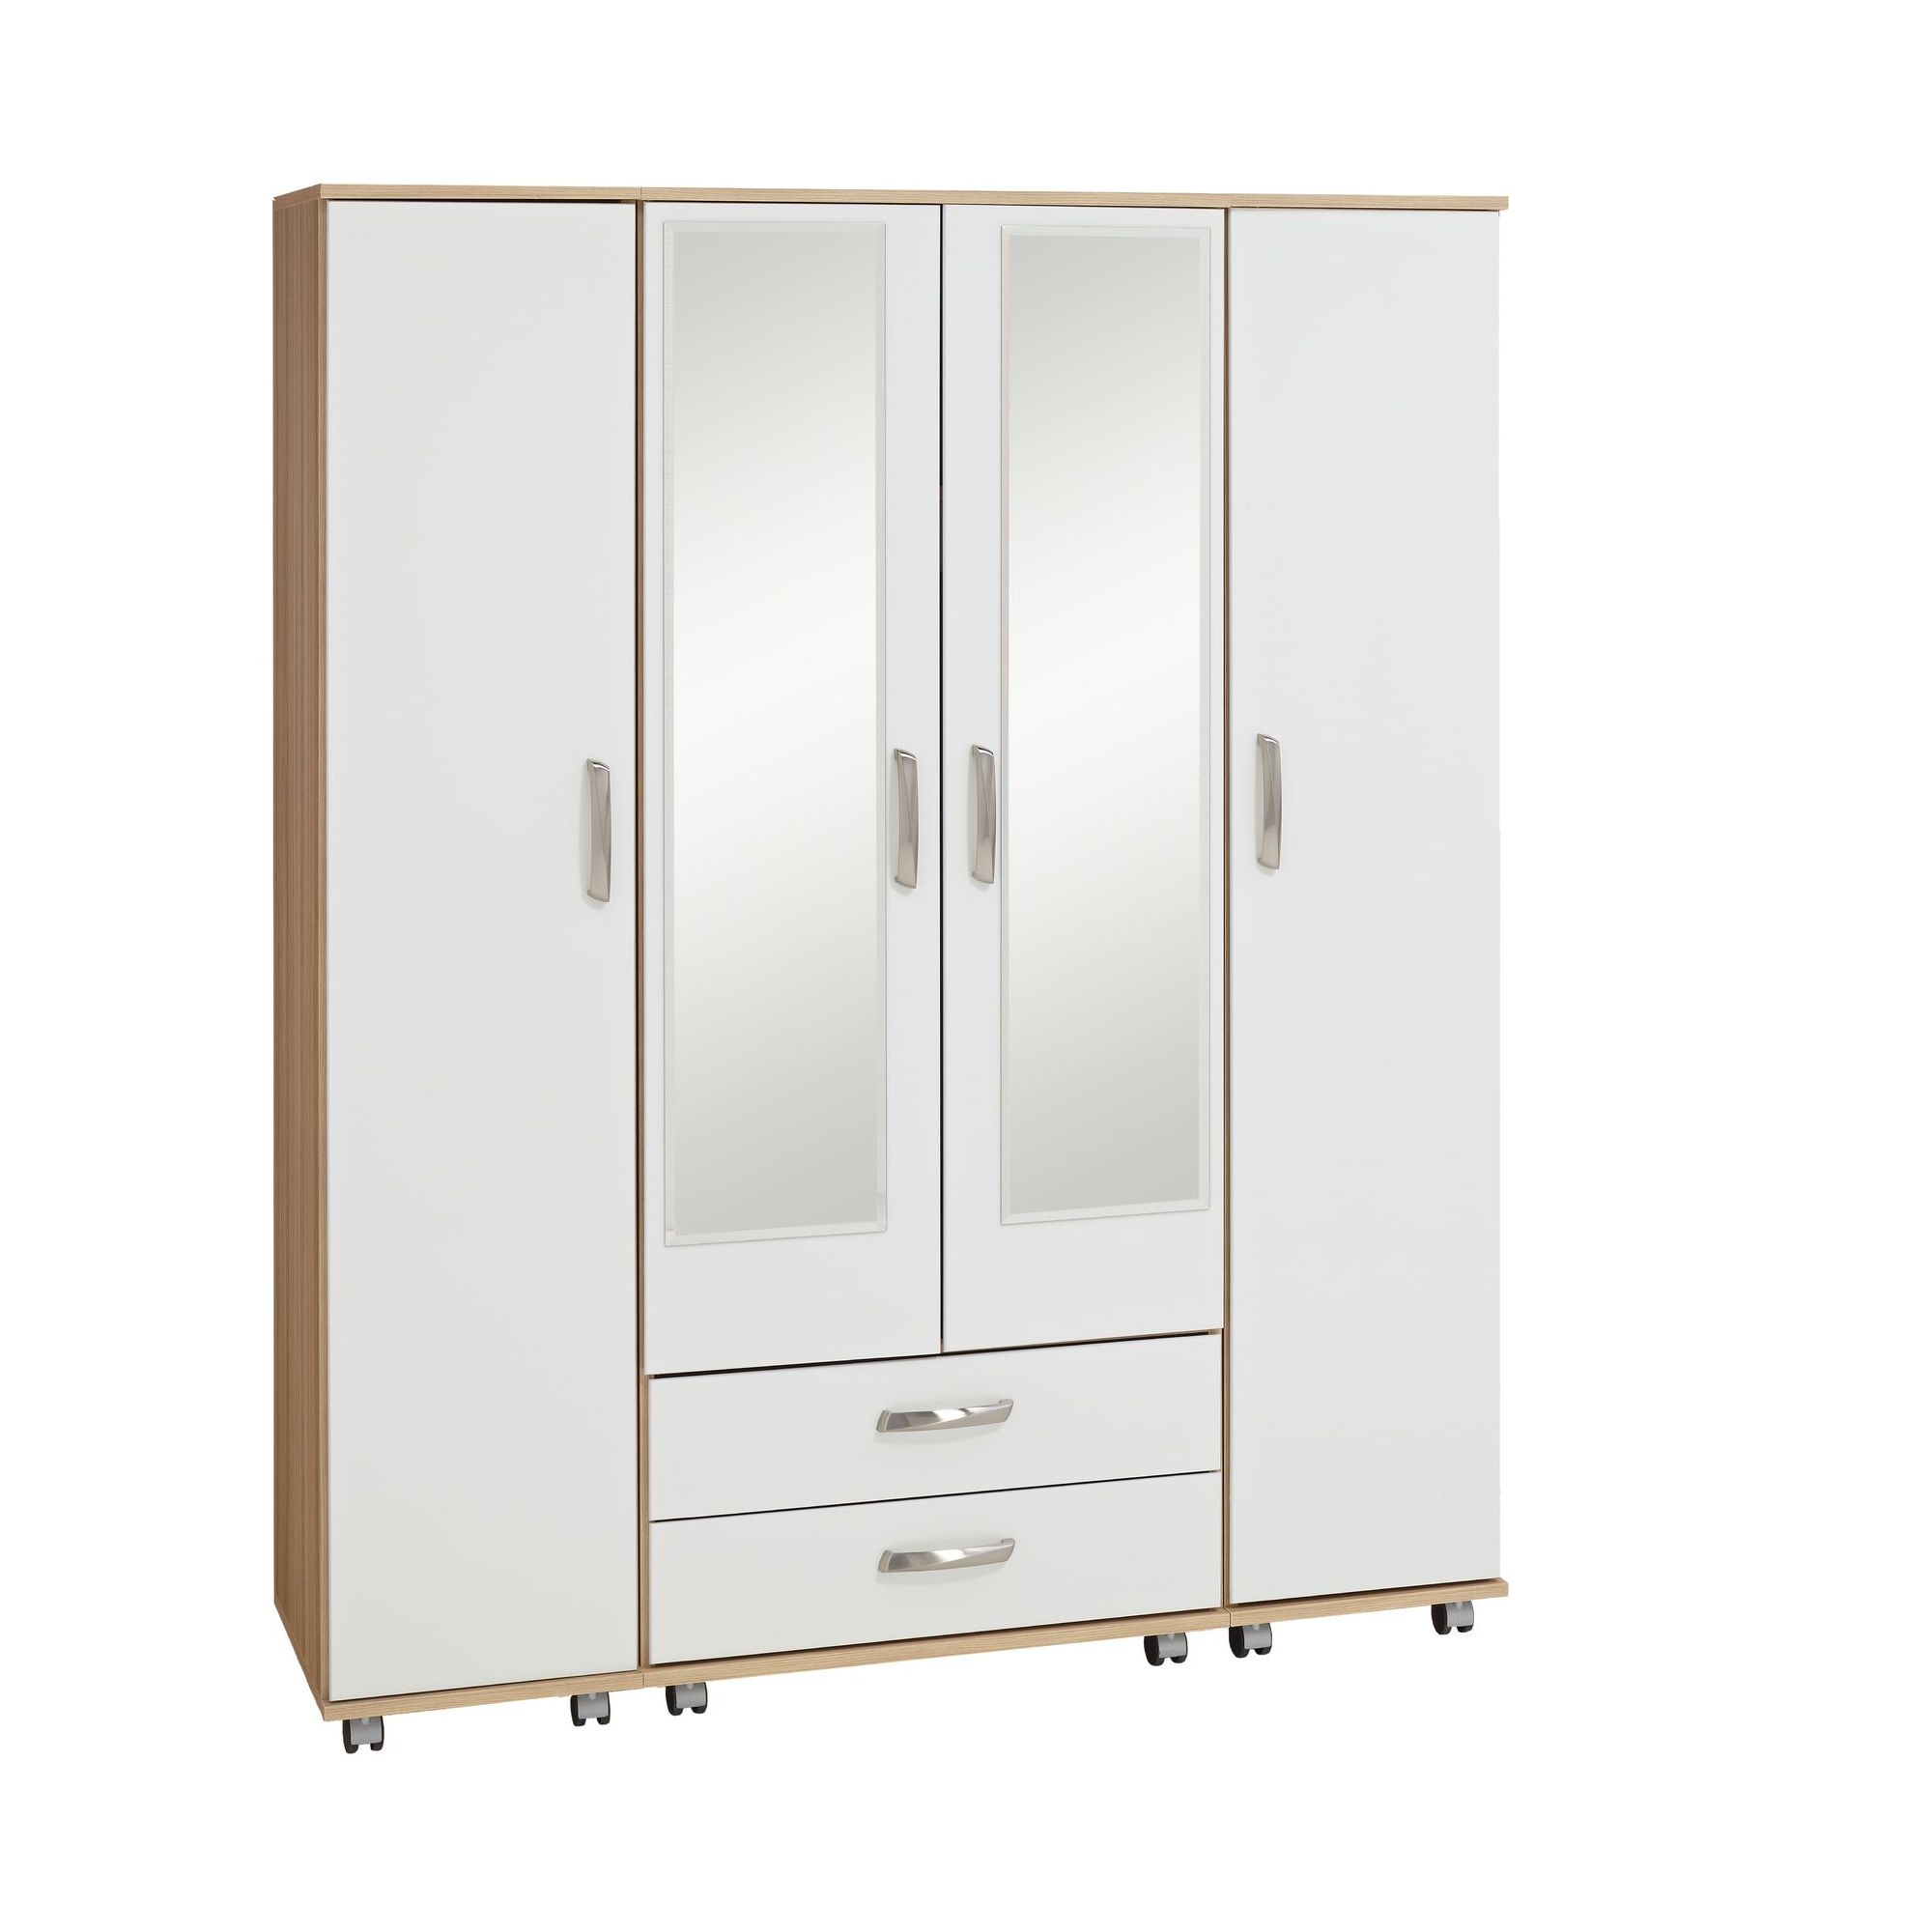 Ideal Furniture Regal Mirror Wardrobe in white at Tesco Direct